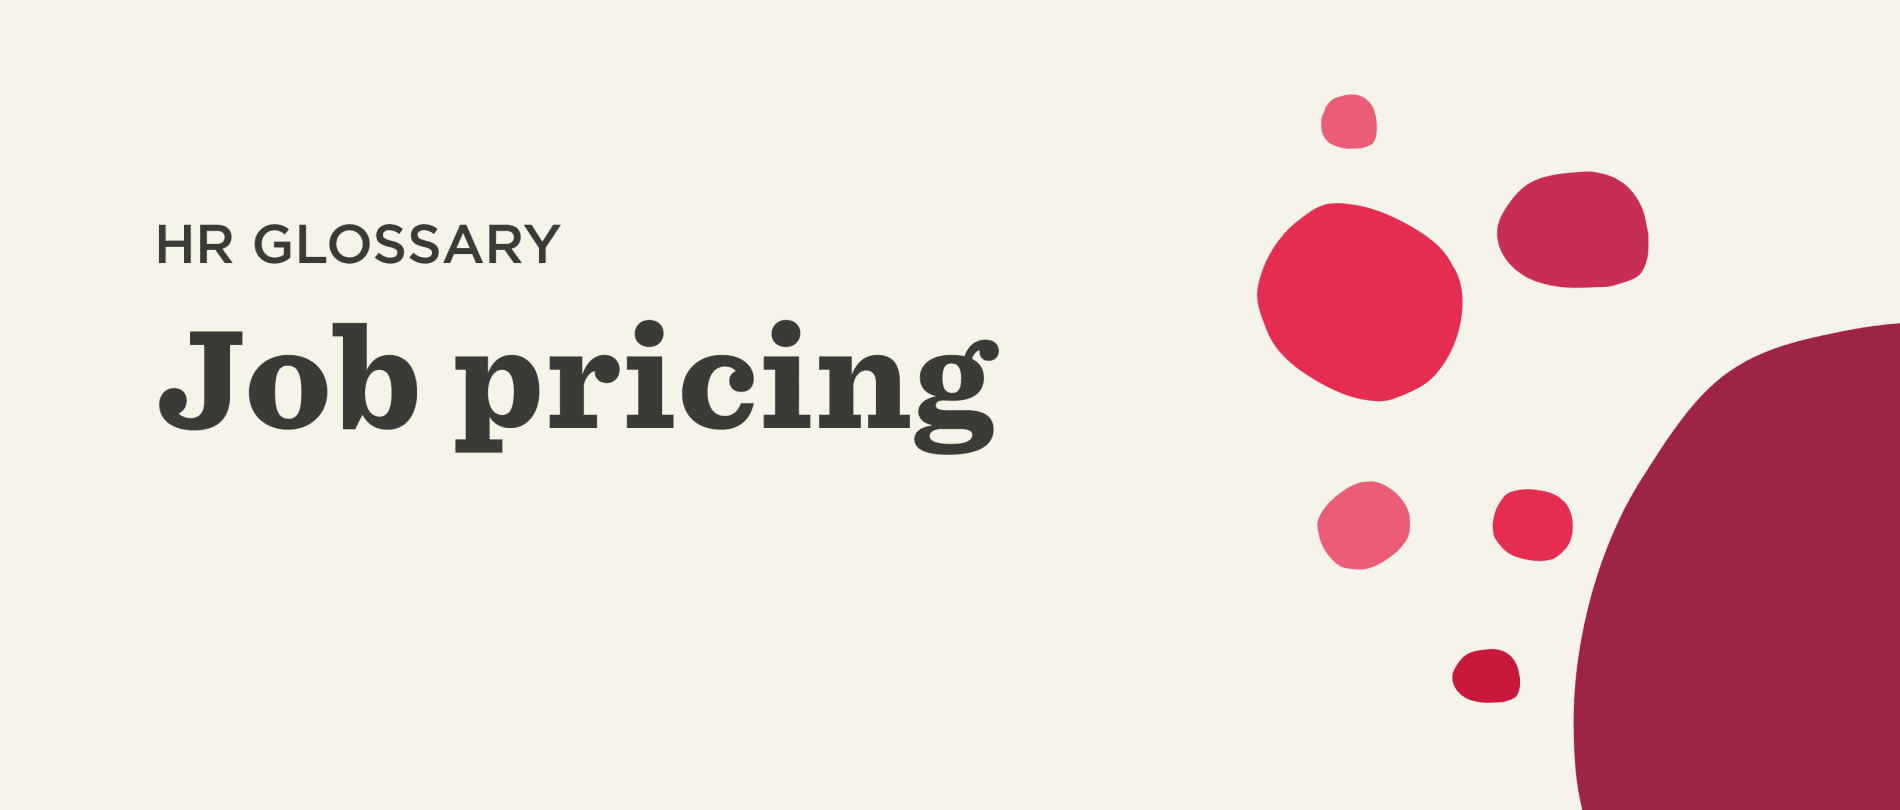 Job pricing